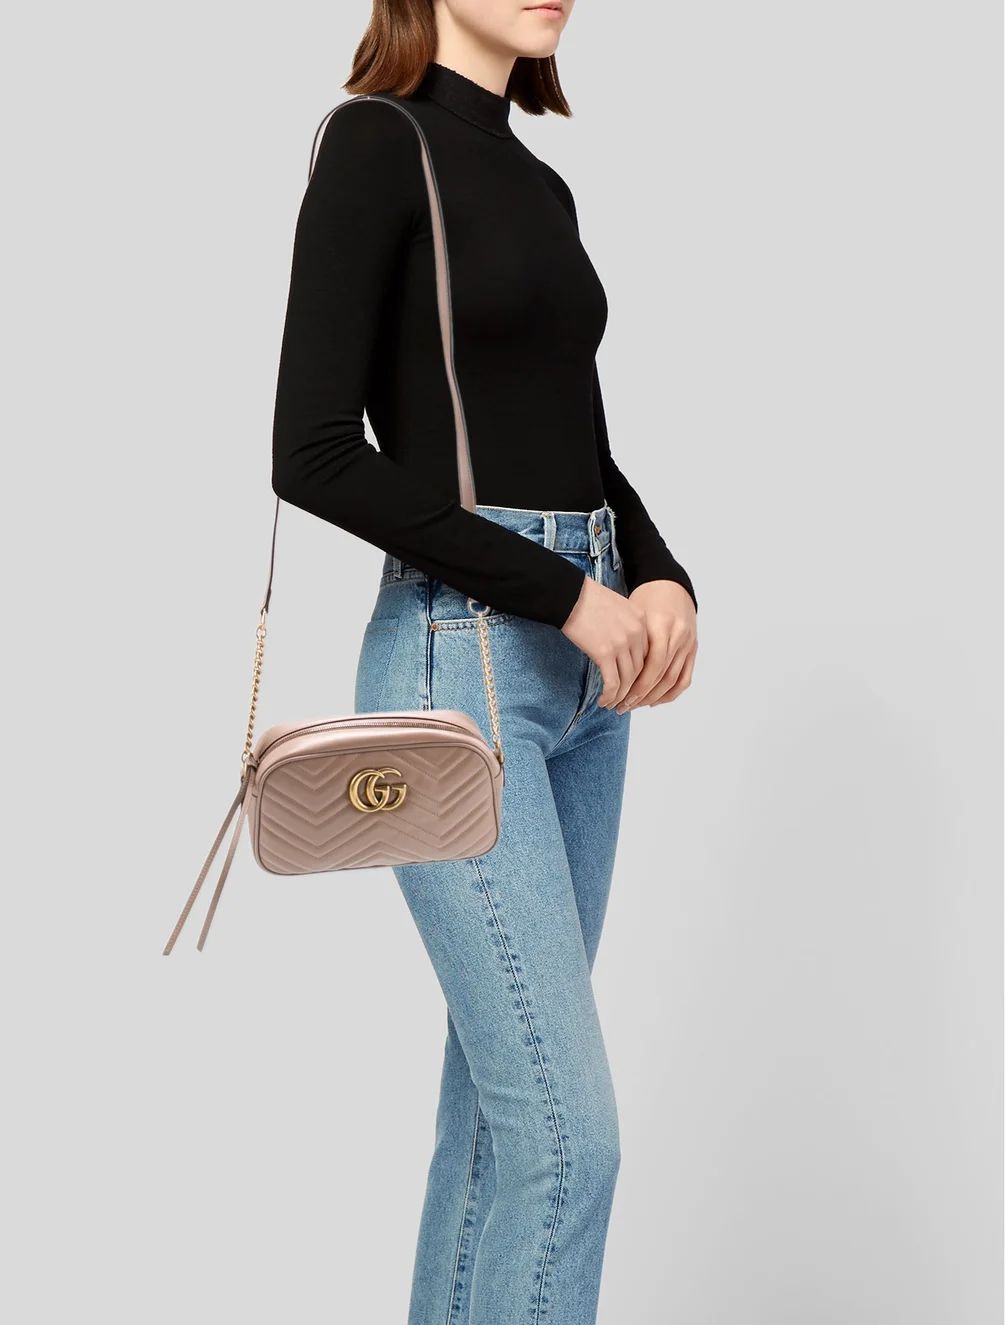 Gucci Shoulder Bag | The RealReal